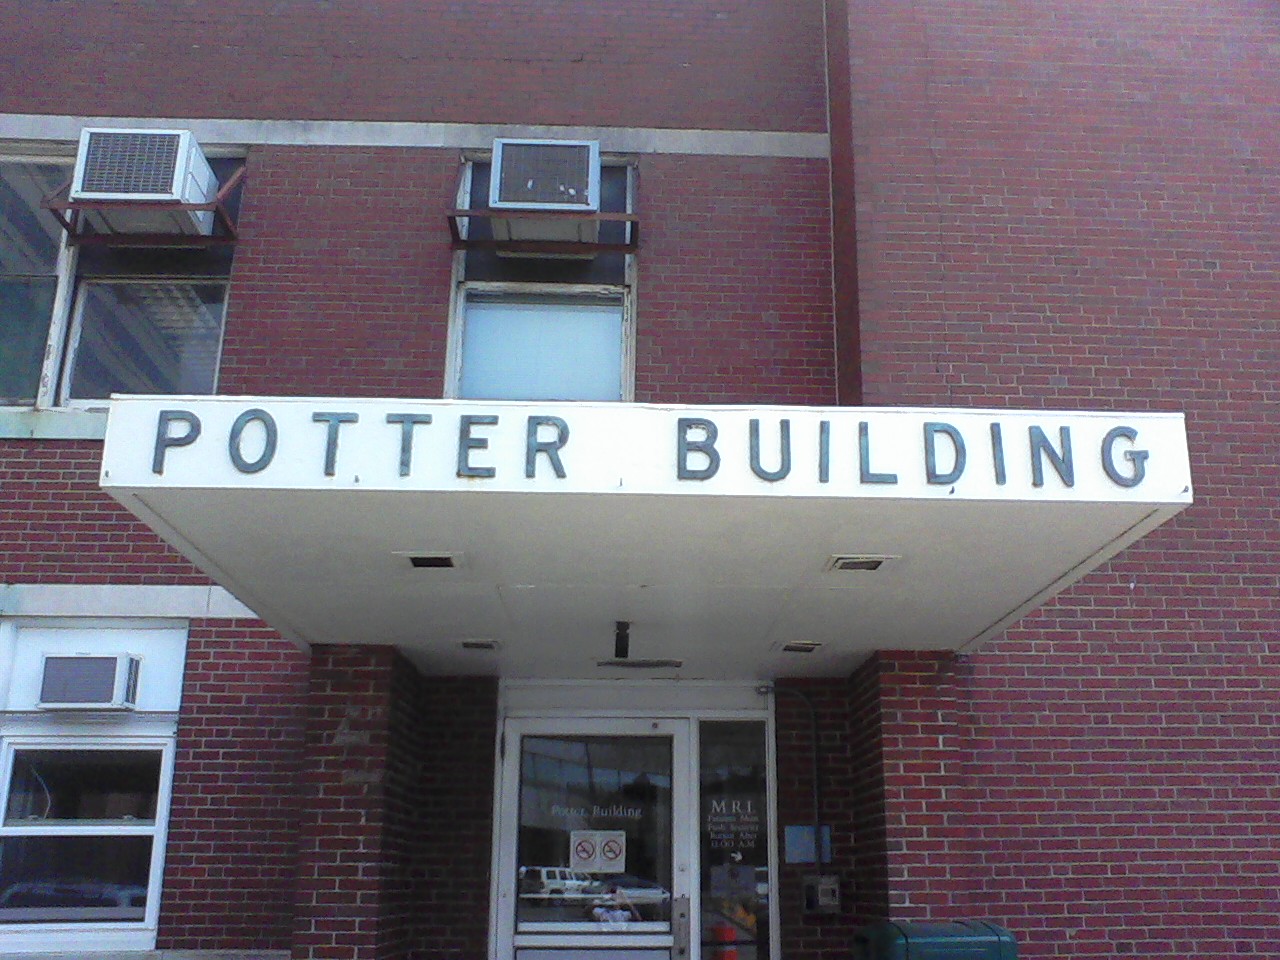 http://1.bp.blogspot.com/-hVsDwdxAWYw/TcgtzsI2SuI/AAAAAAAAAeY/Cy-pahhymw4/s1600/Potter+Building.jpg